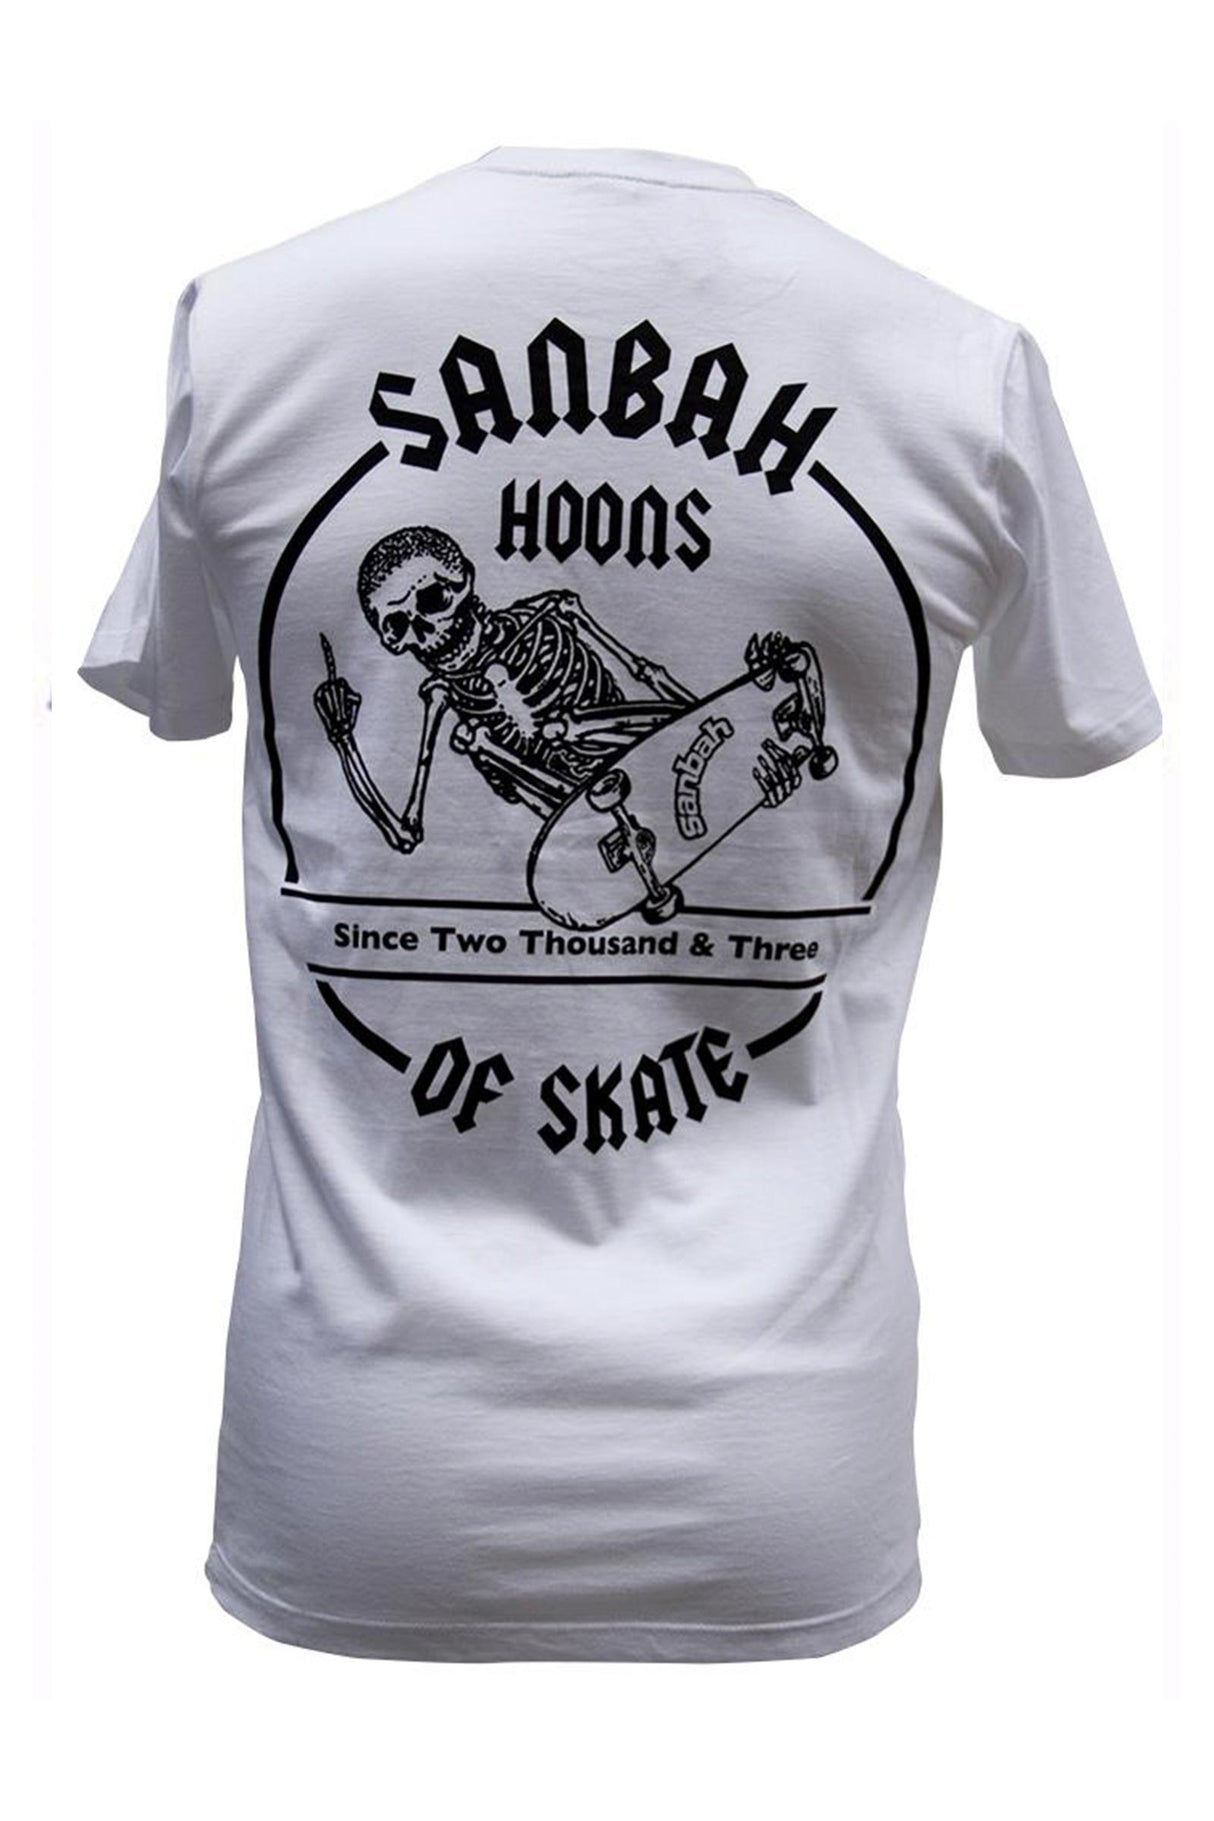 Sanbah Adult Hoons T-Shirt